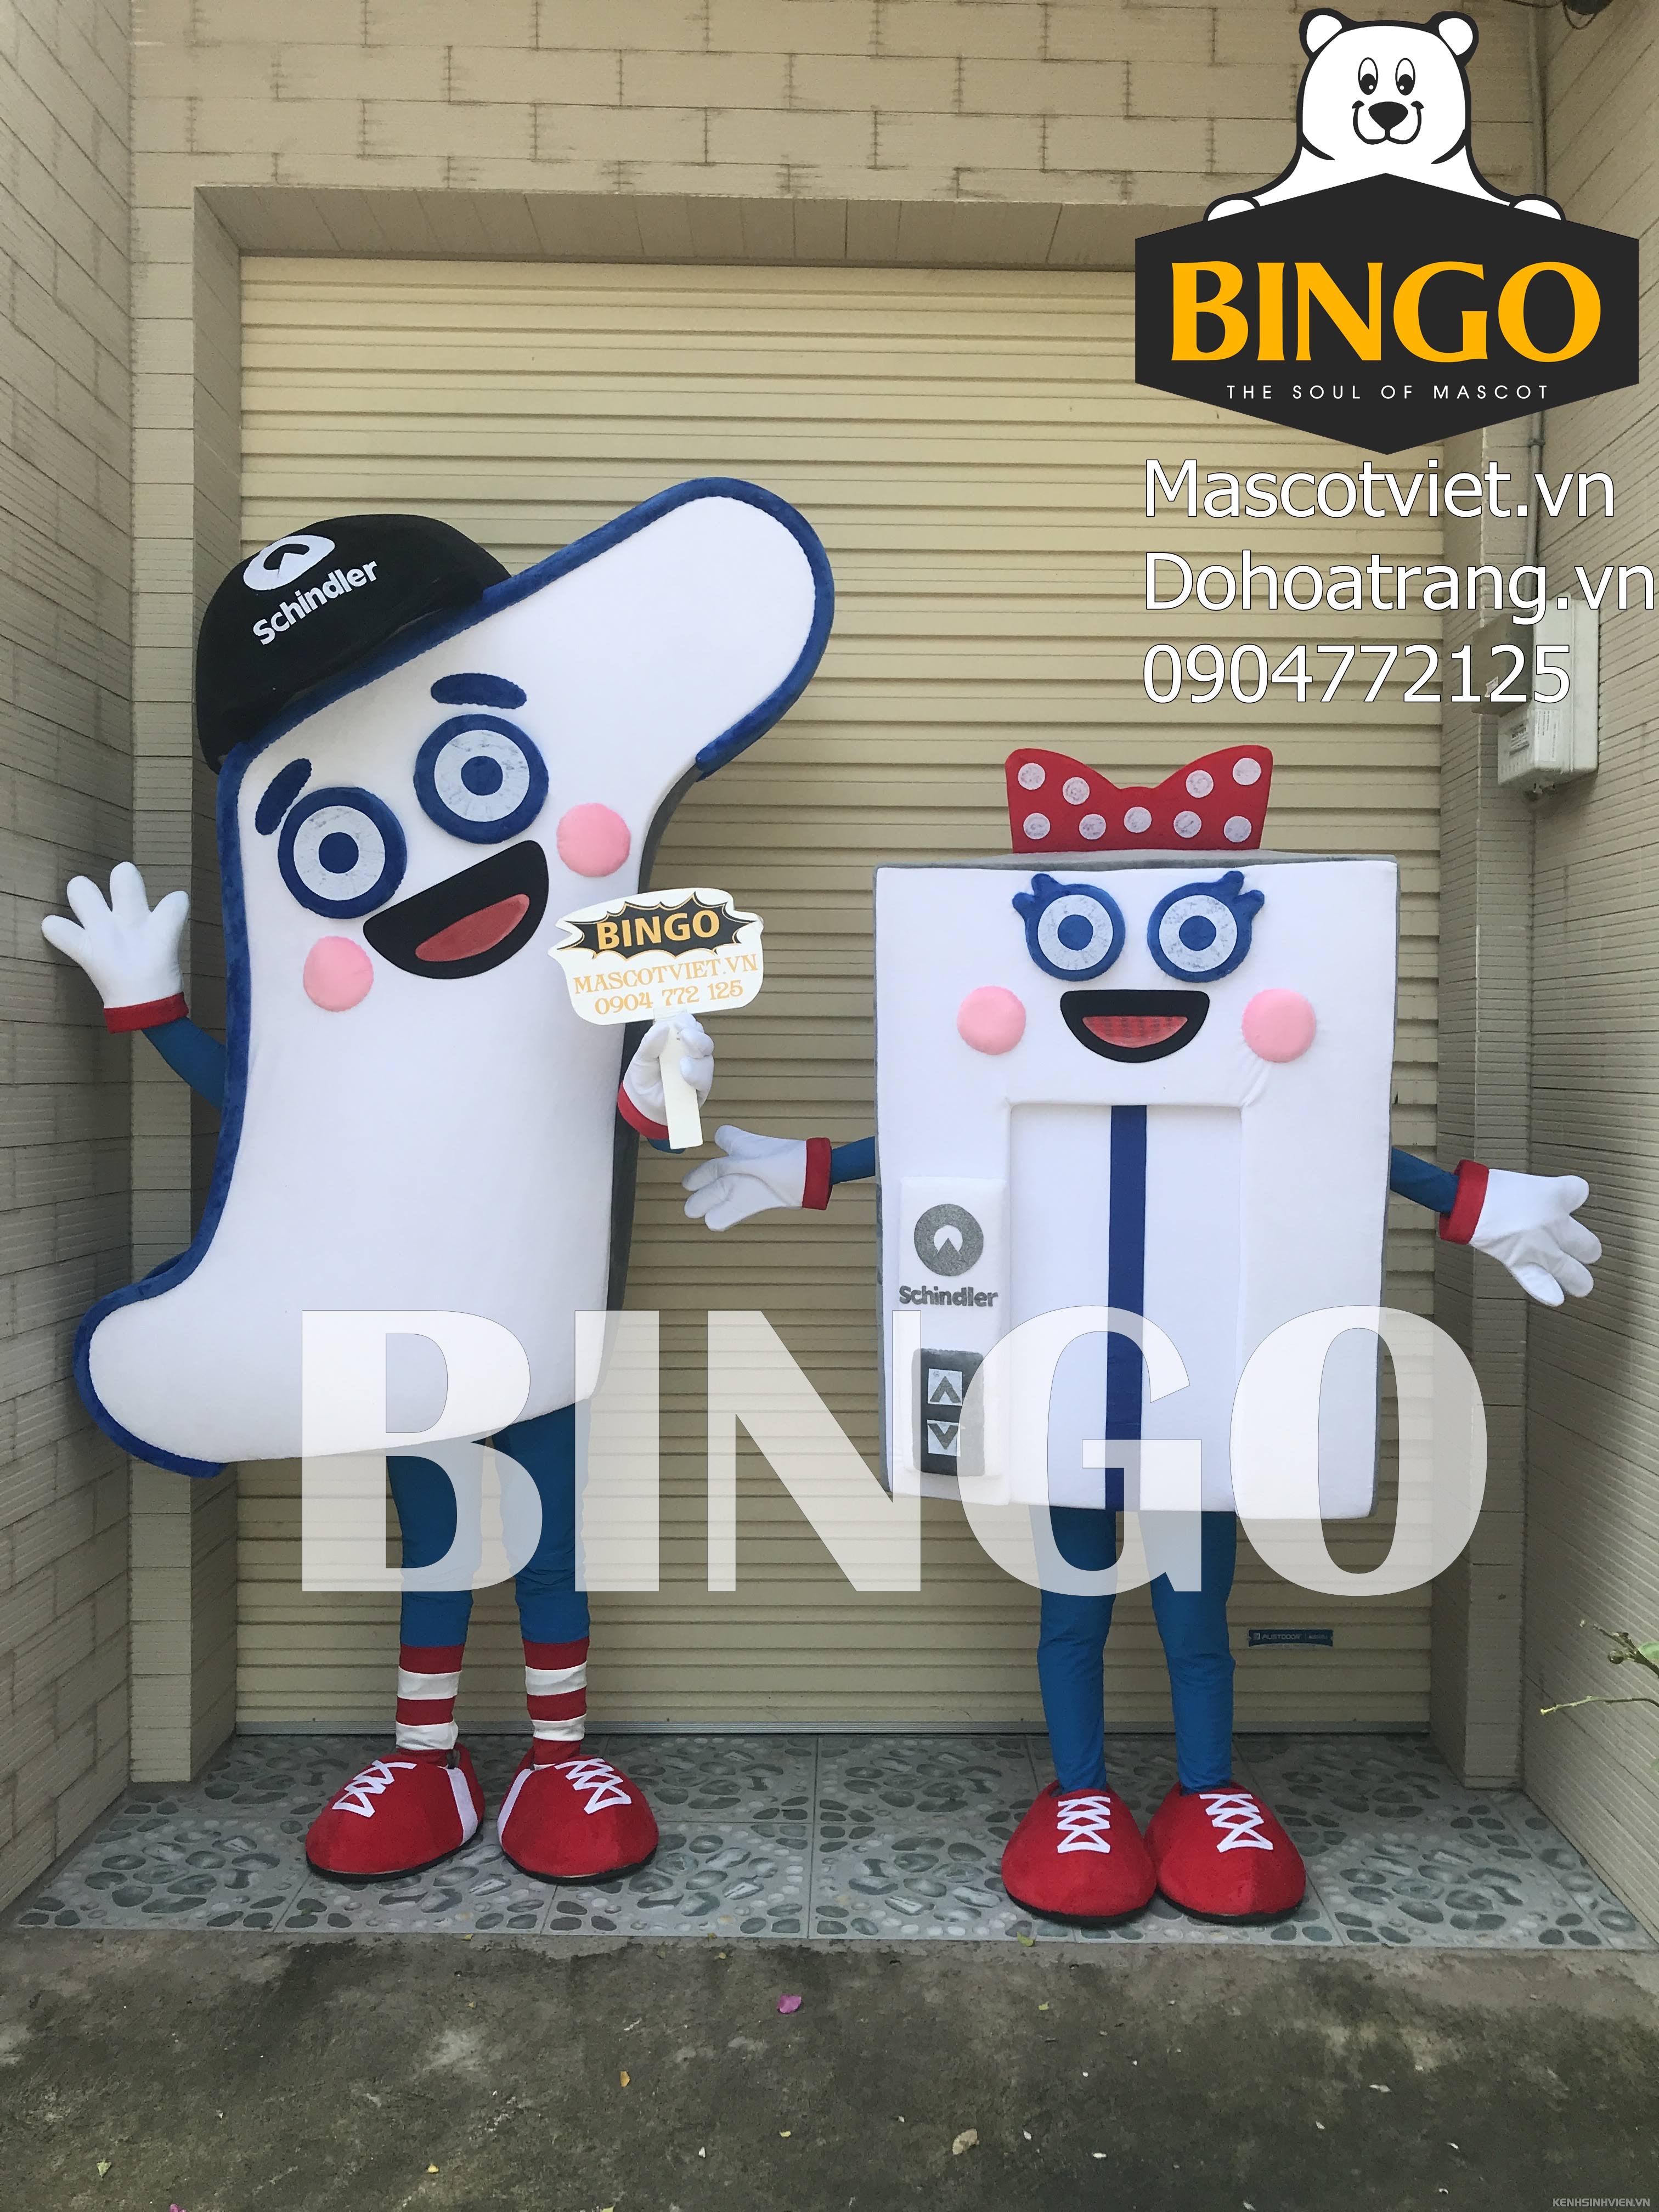 mascot-thang-may-bingo-costumes-0904772125-4-.jpg